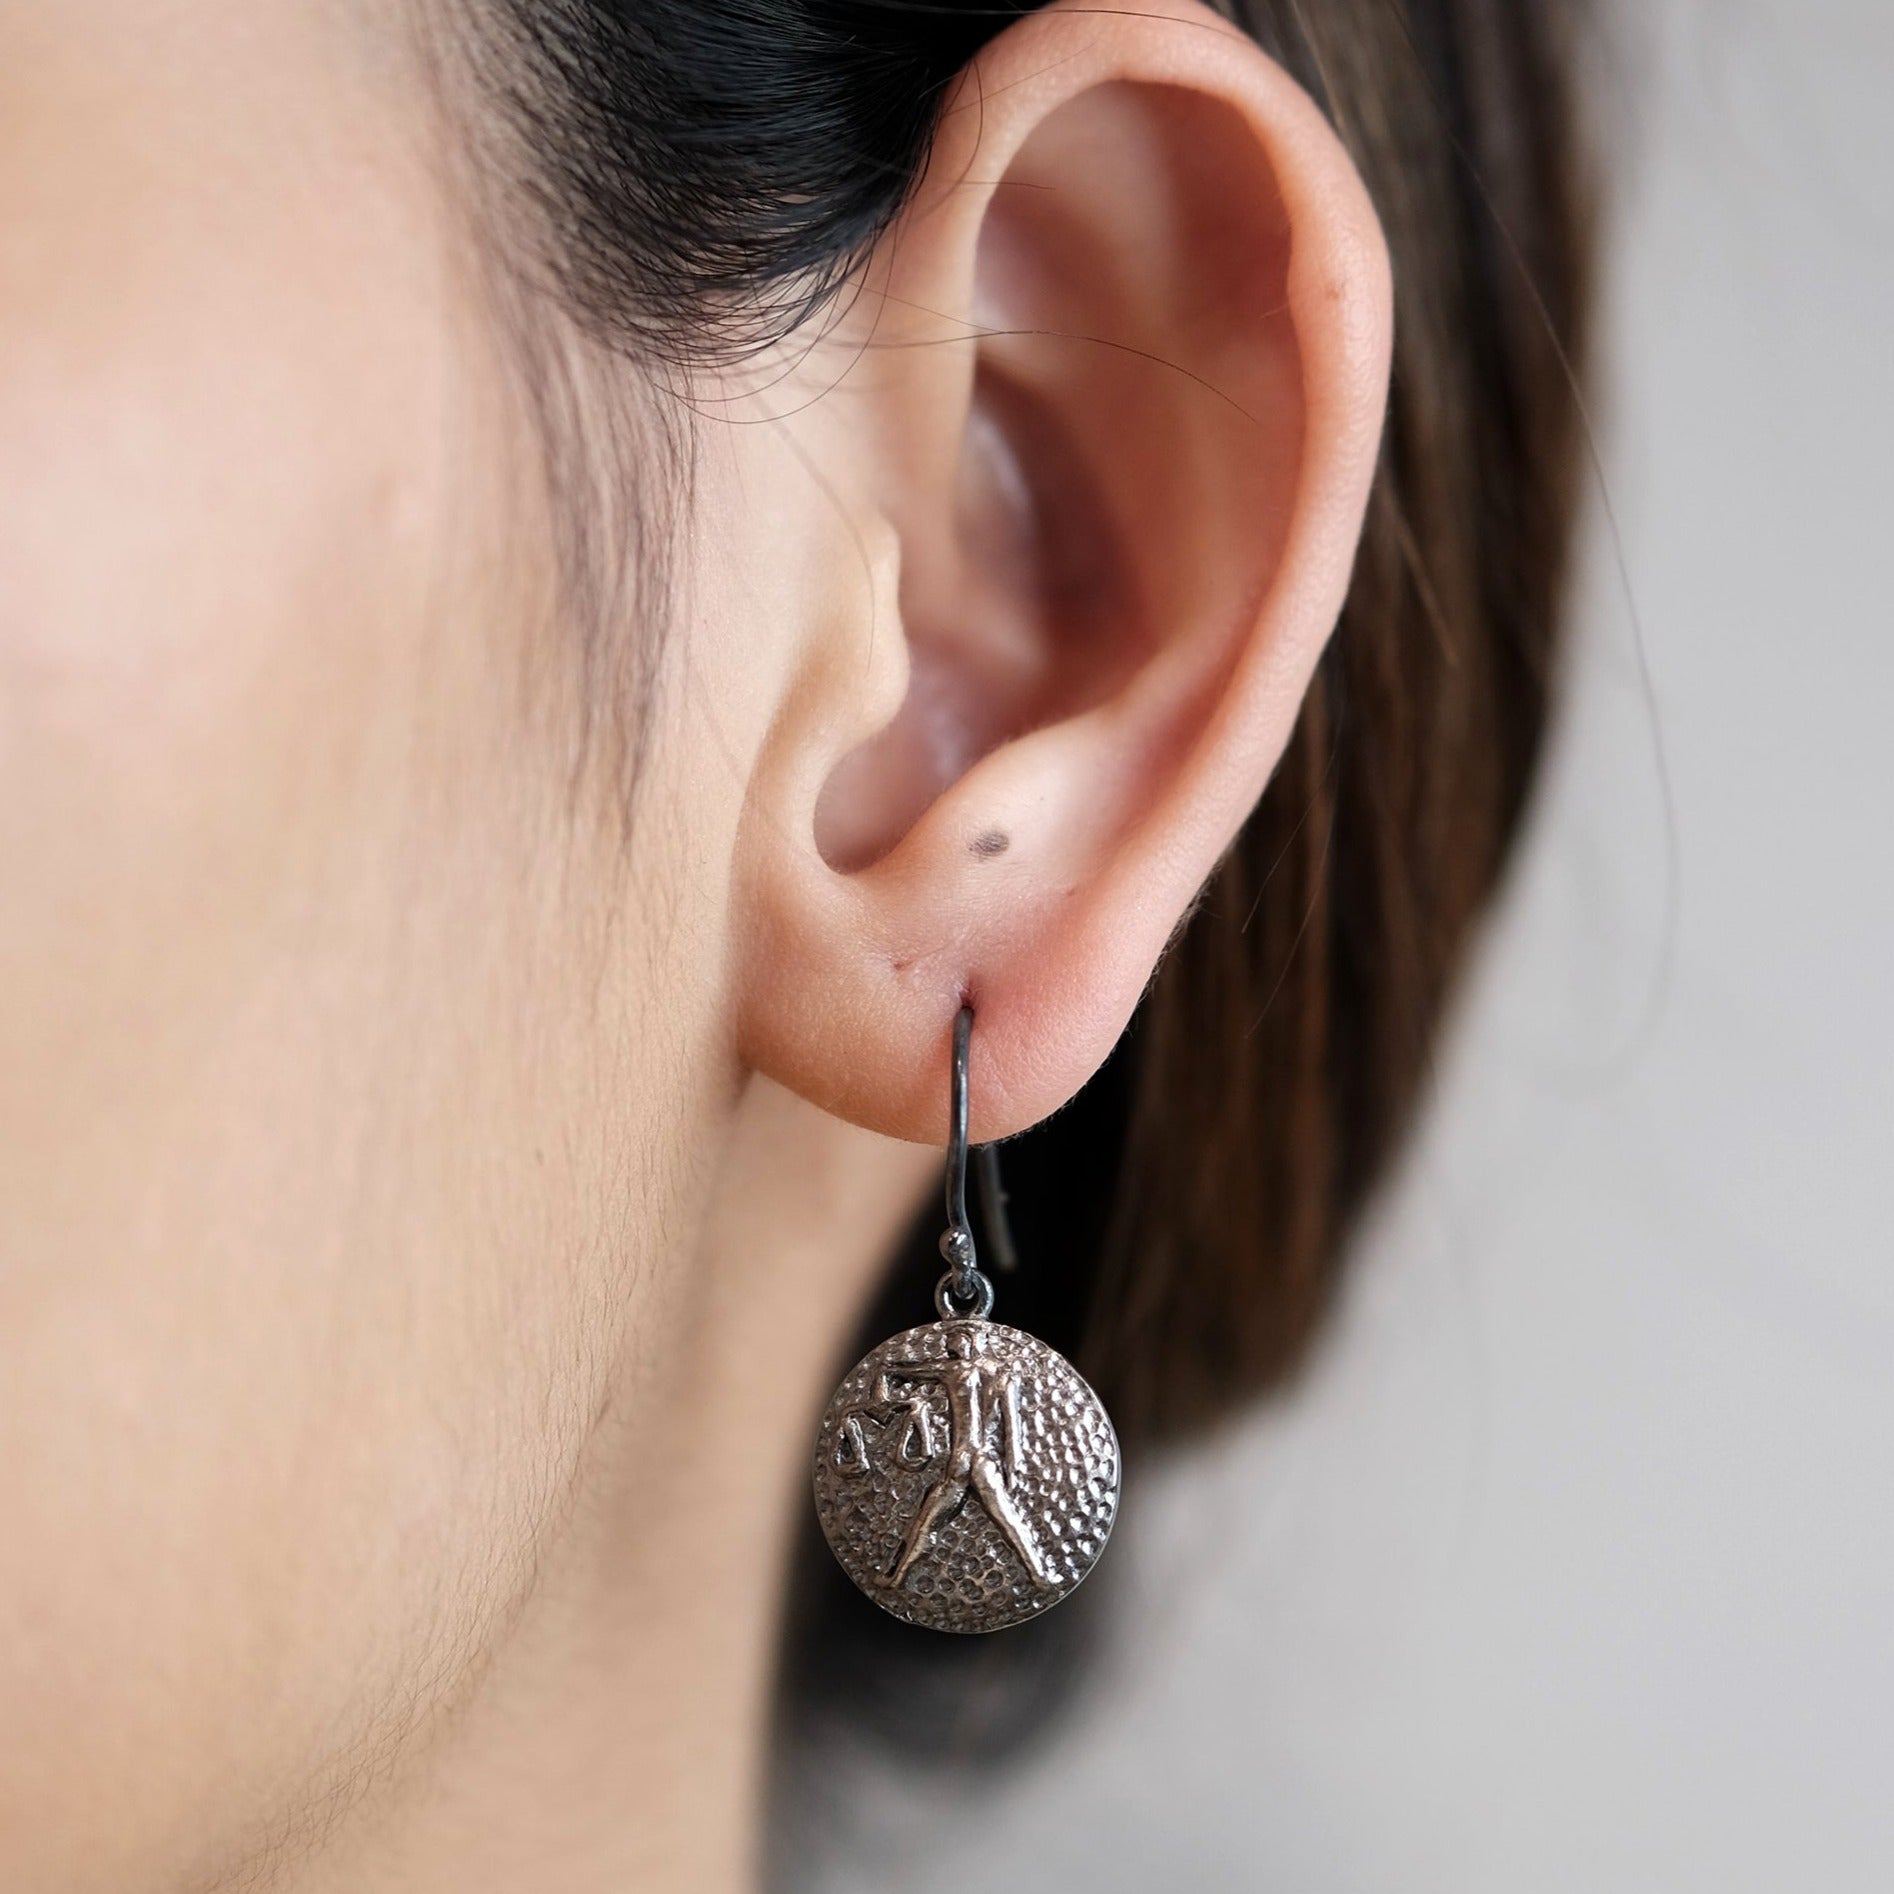 The Madstone Libra earrings